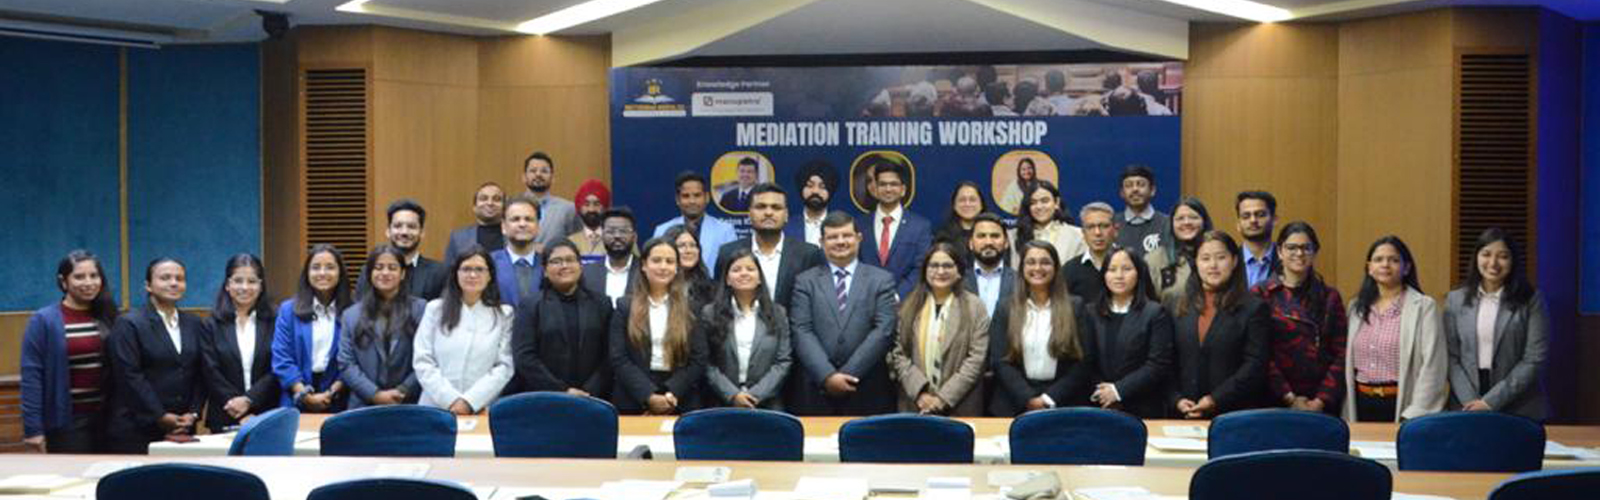 Mediation Training Workshop Conducted at Indian Habitat Centre, Delhi with Manupatra